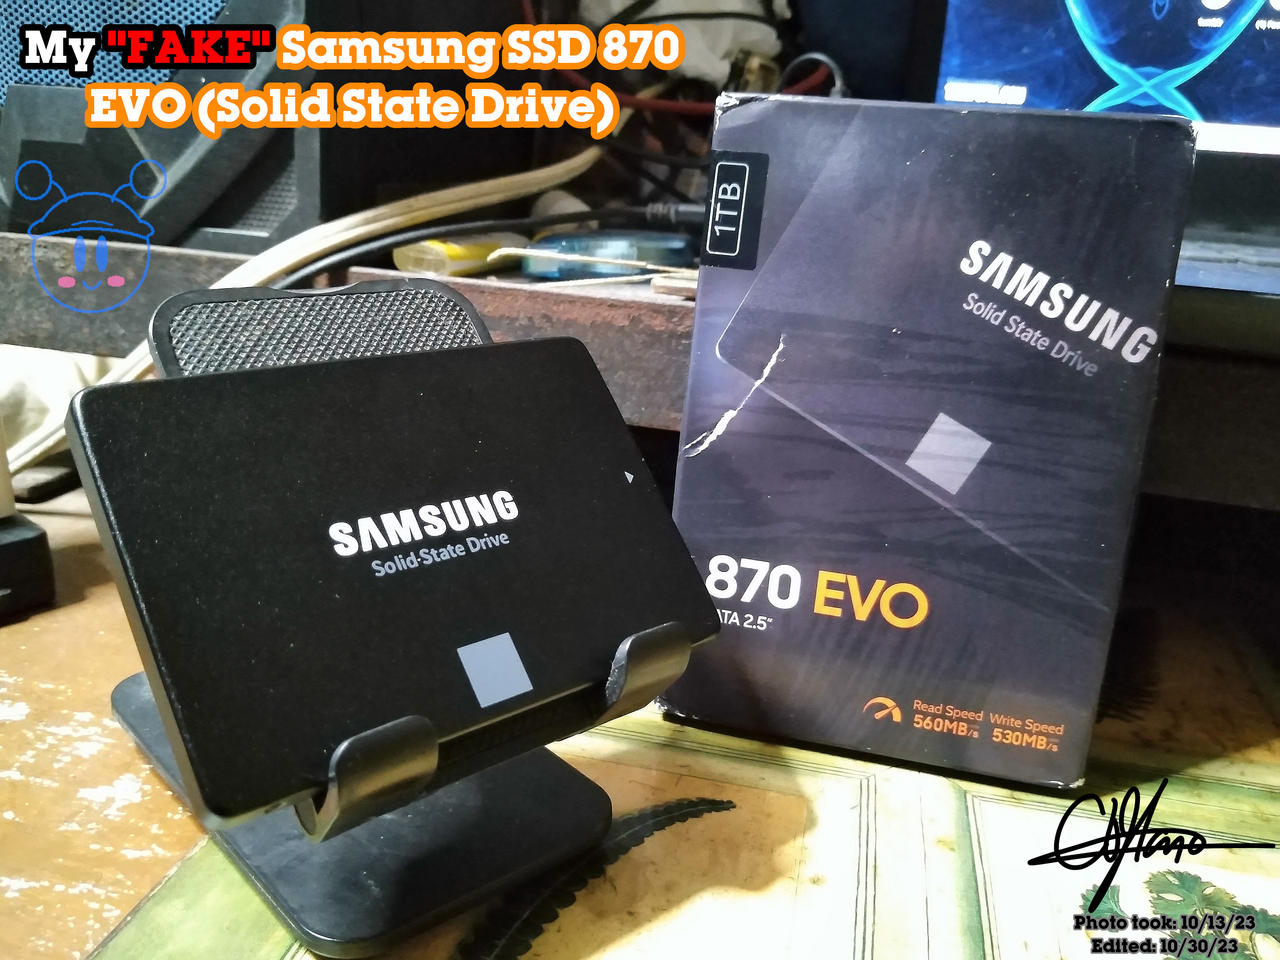 Samsung 870 EVO SSD – Specs and information